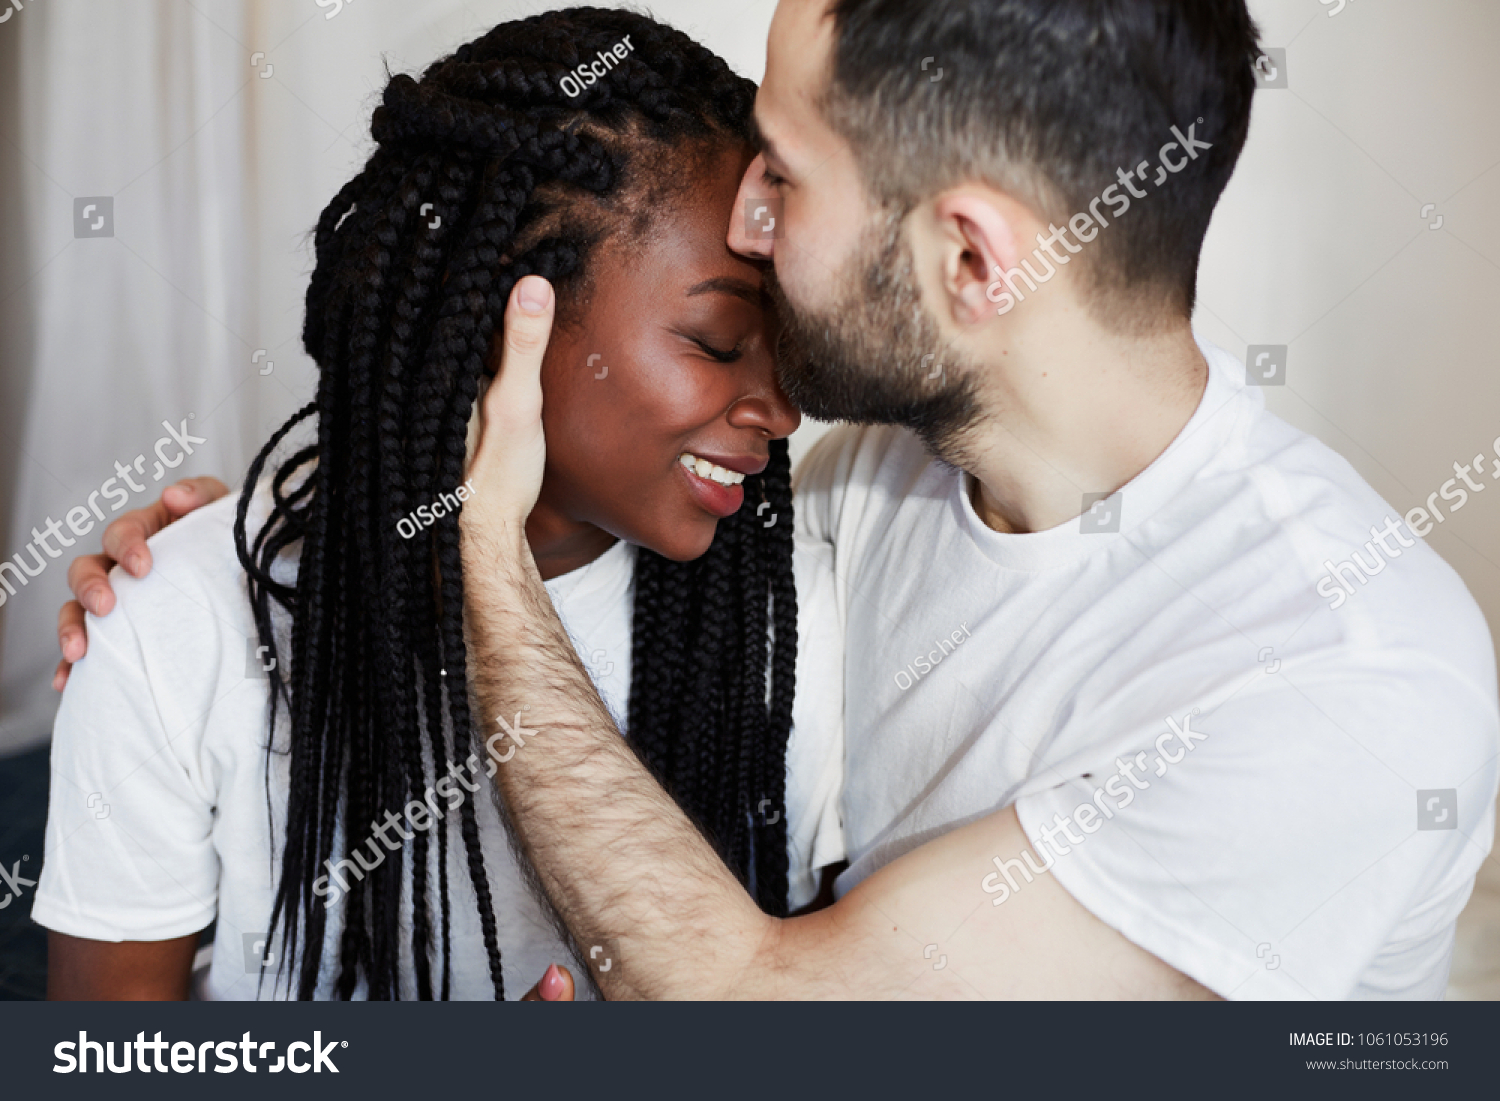 https://image.shutterstock.com/z/stock-photo-international-couple-african-american-girl-and-white-man-hugging-on-bed-1061053196.jpg